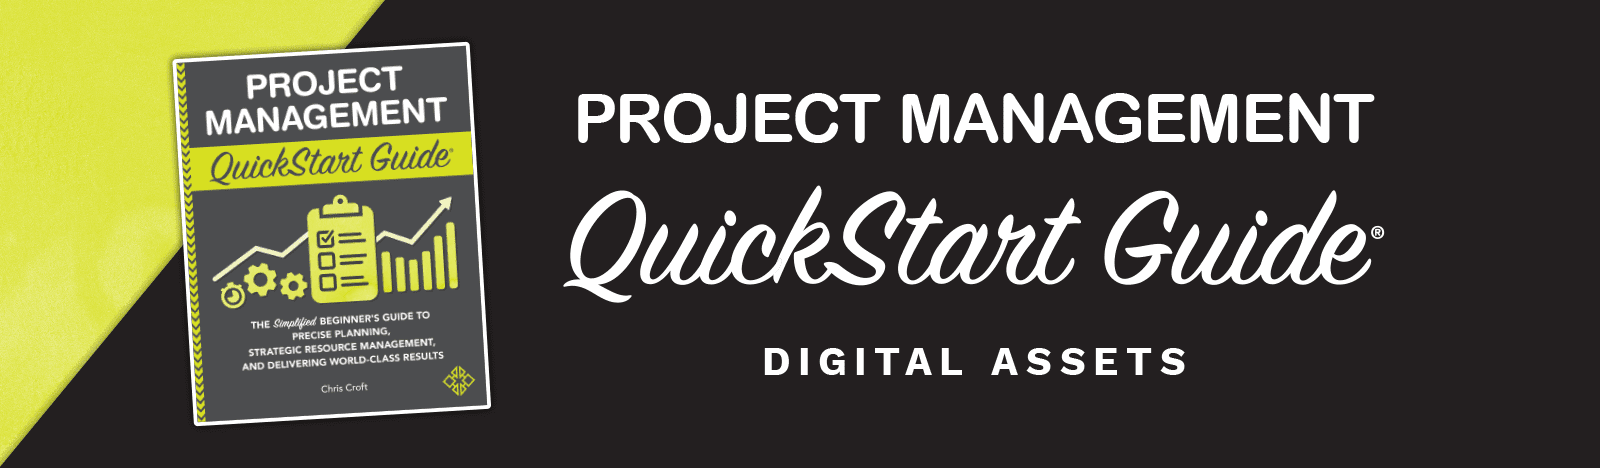 Project Management QuickStart Guide Digital Assets Header Image